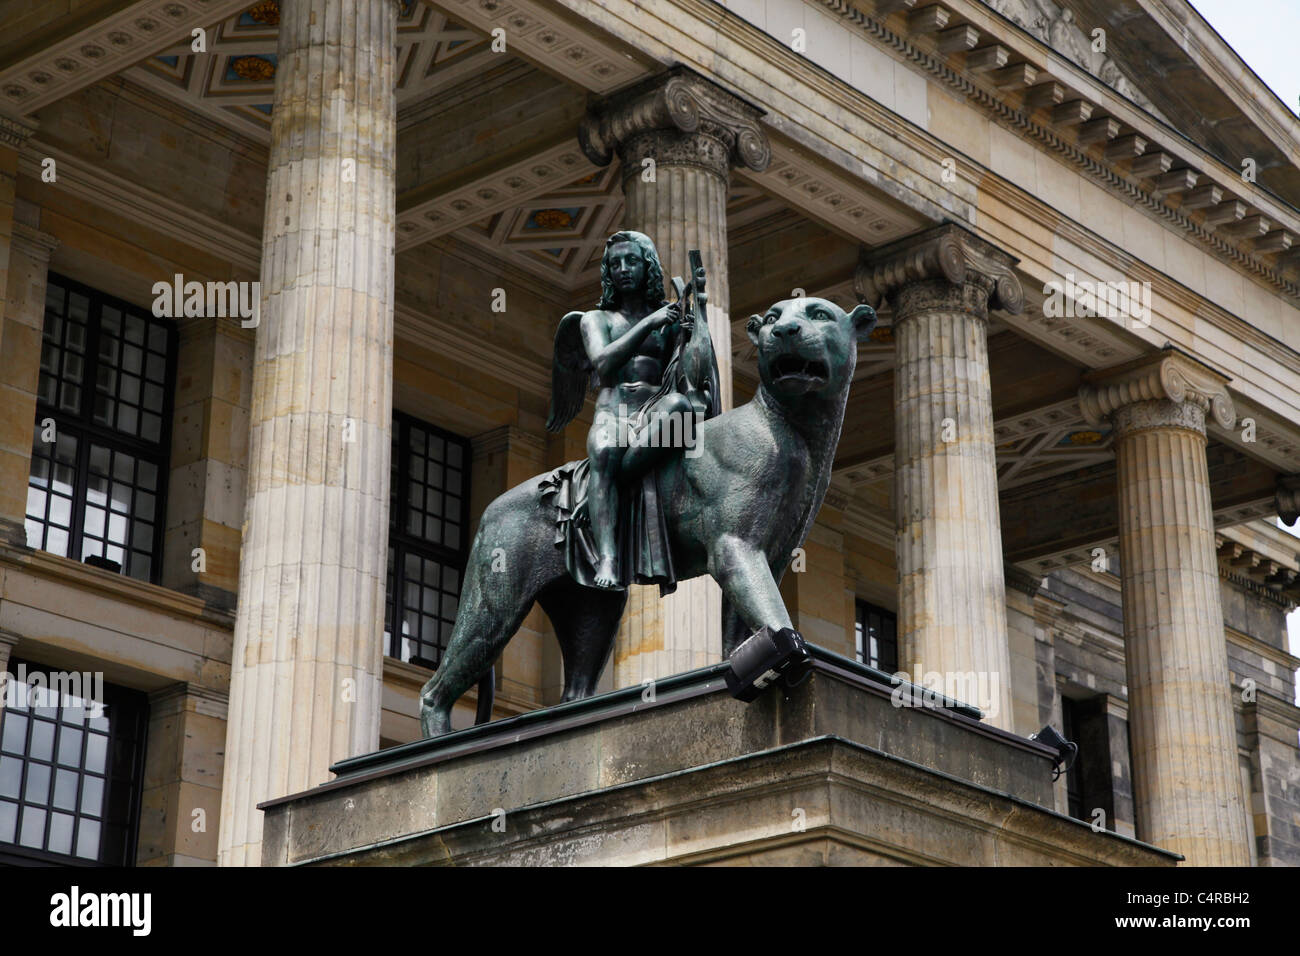 La statua "Genius of Music Riding a Panther" di Christian Friedrich Tieck si trova all'ingresso della Konzert haus Concert House, ex Schauspielhaus, a Gendarmenmarkt, Berlino Germania Foto Stock